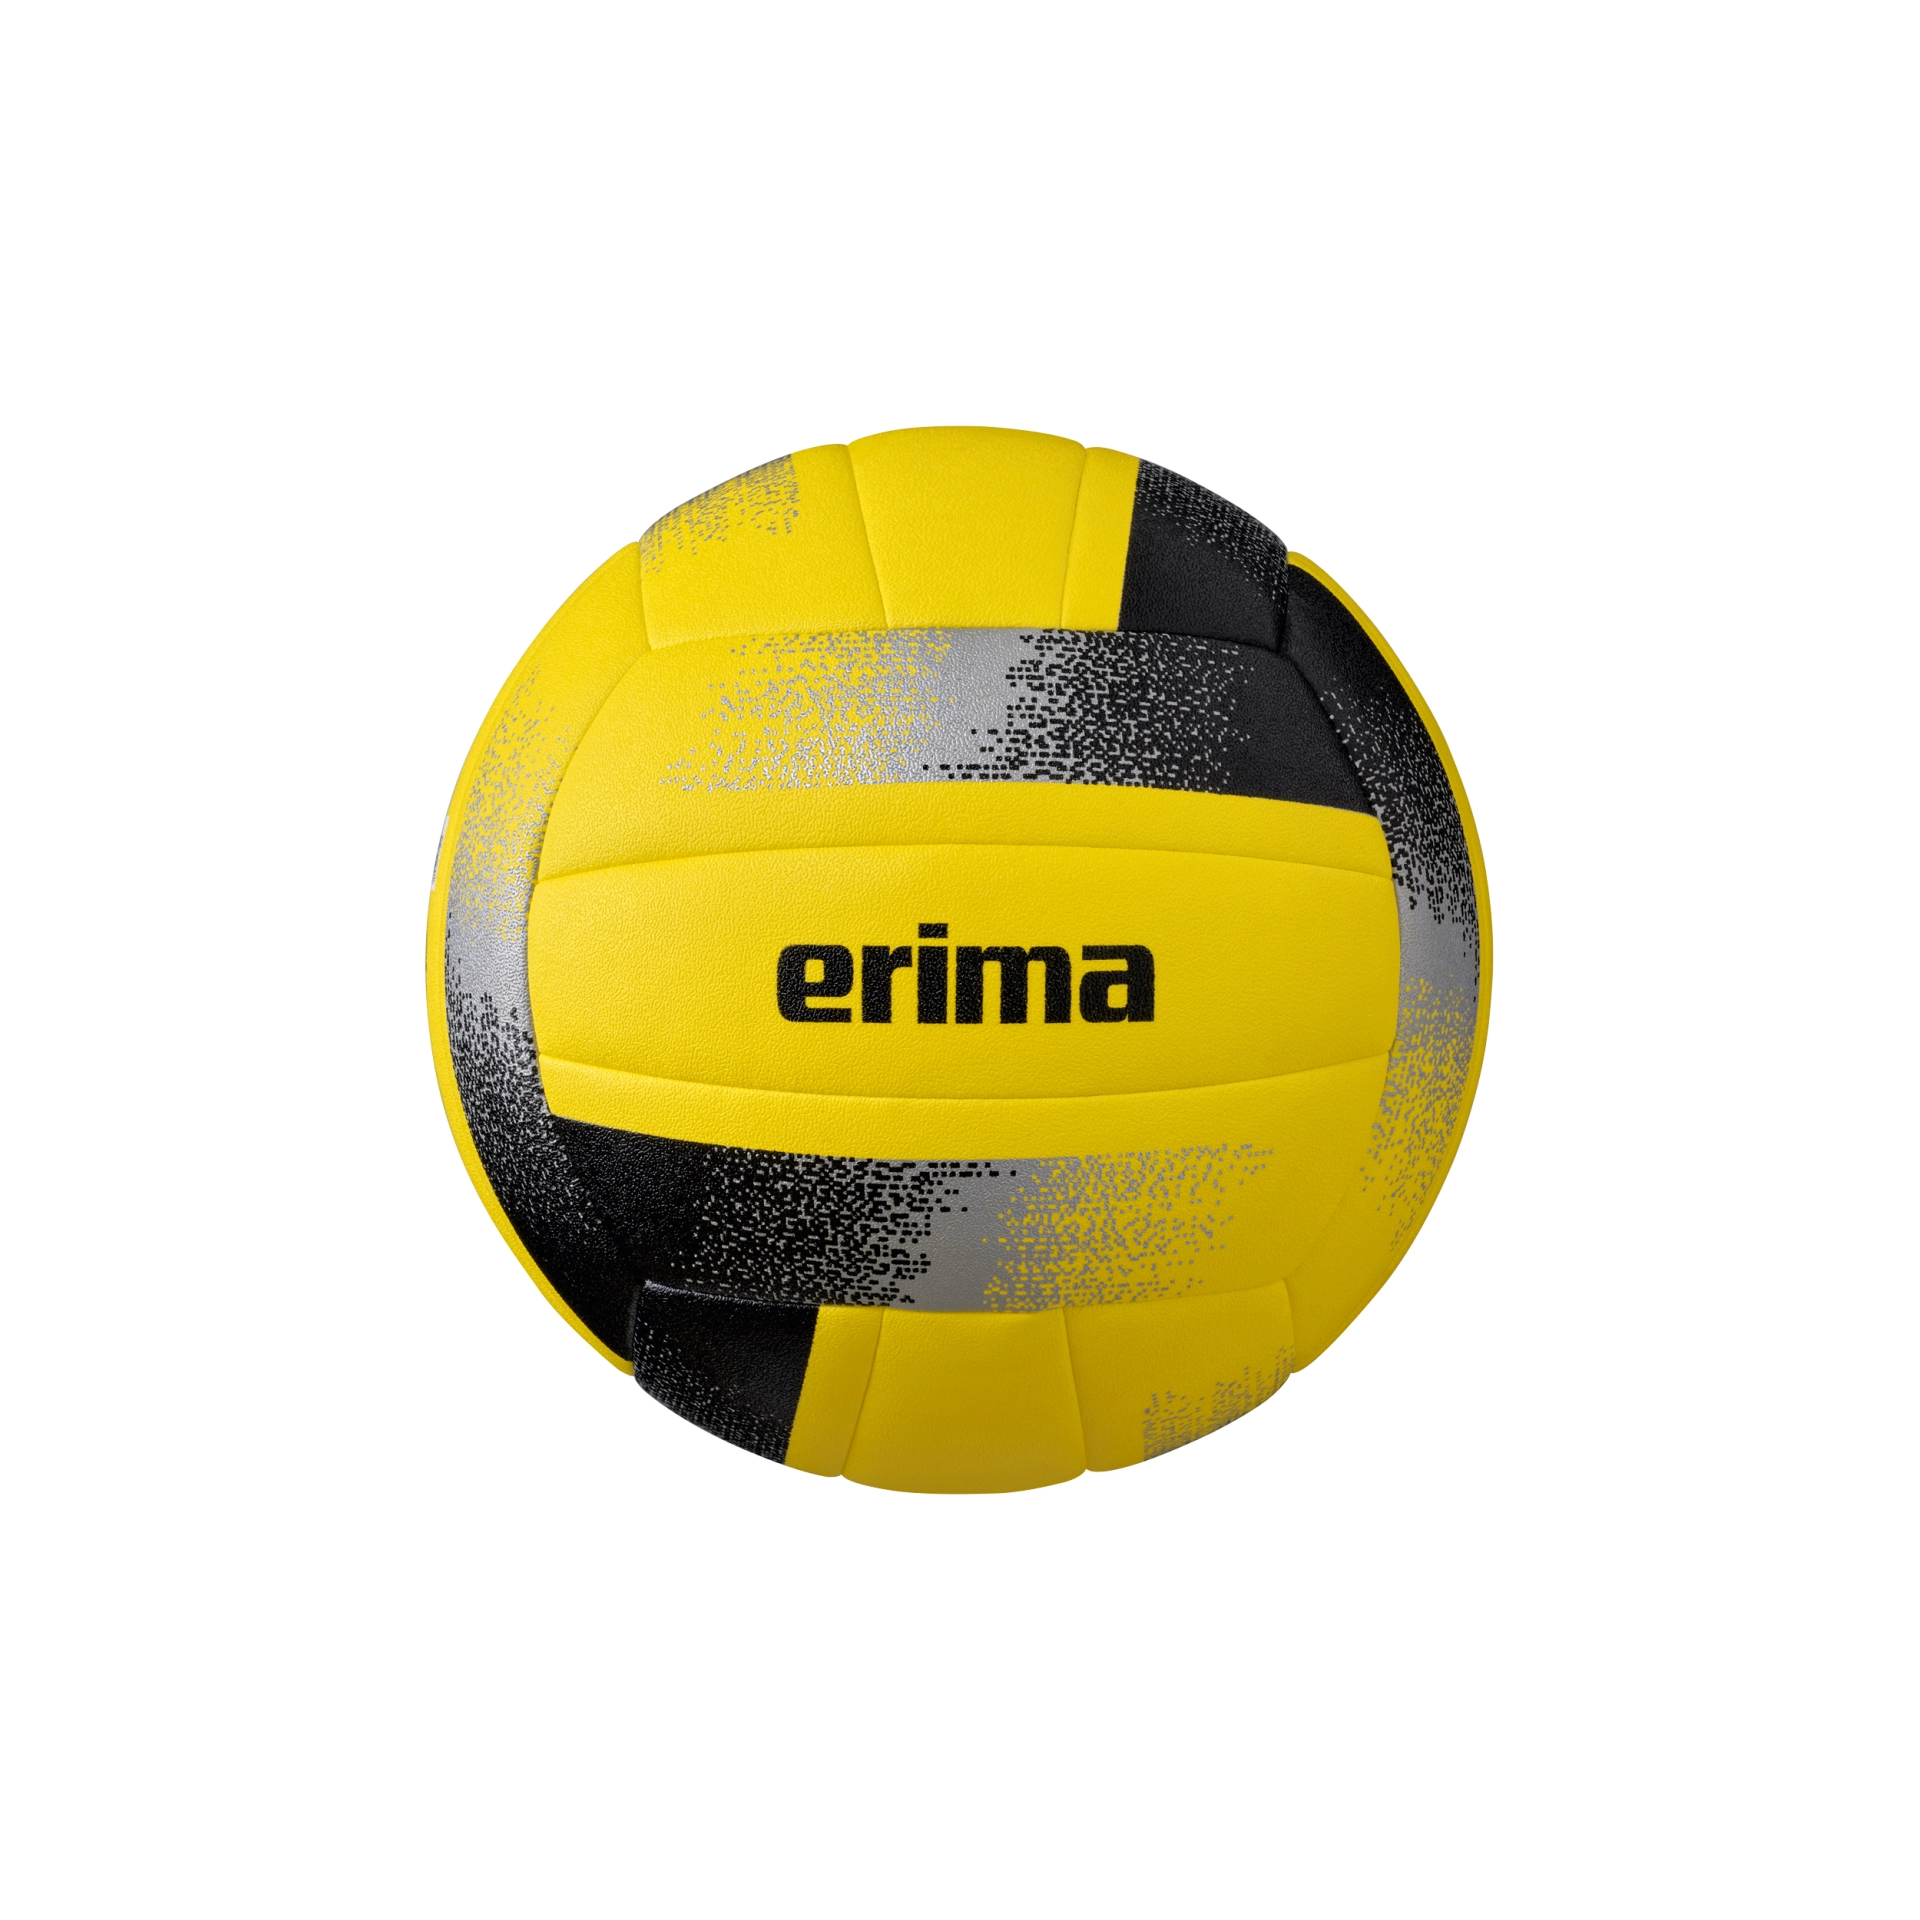 ERIMA Hybrid_Volleyball 7402301 140955 yellow/black/silver